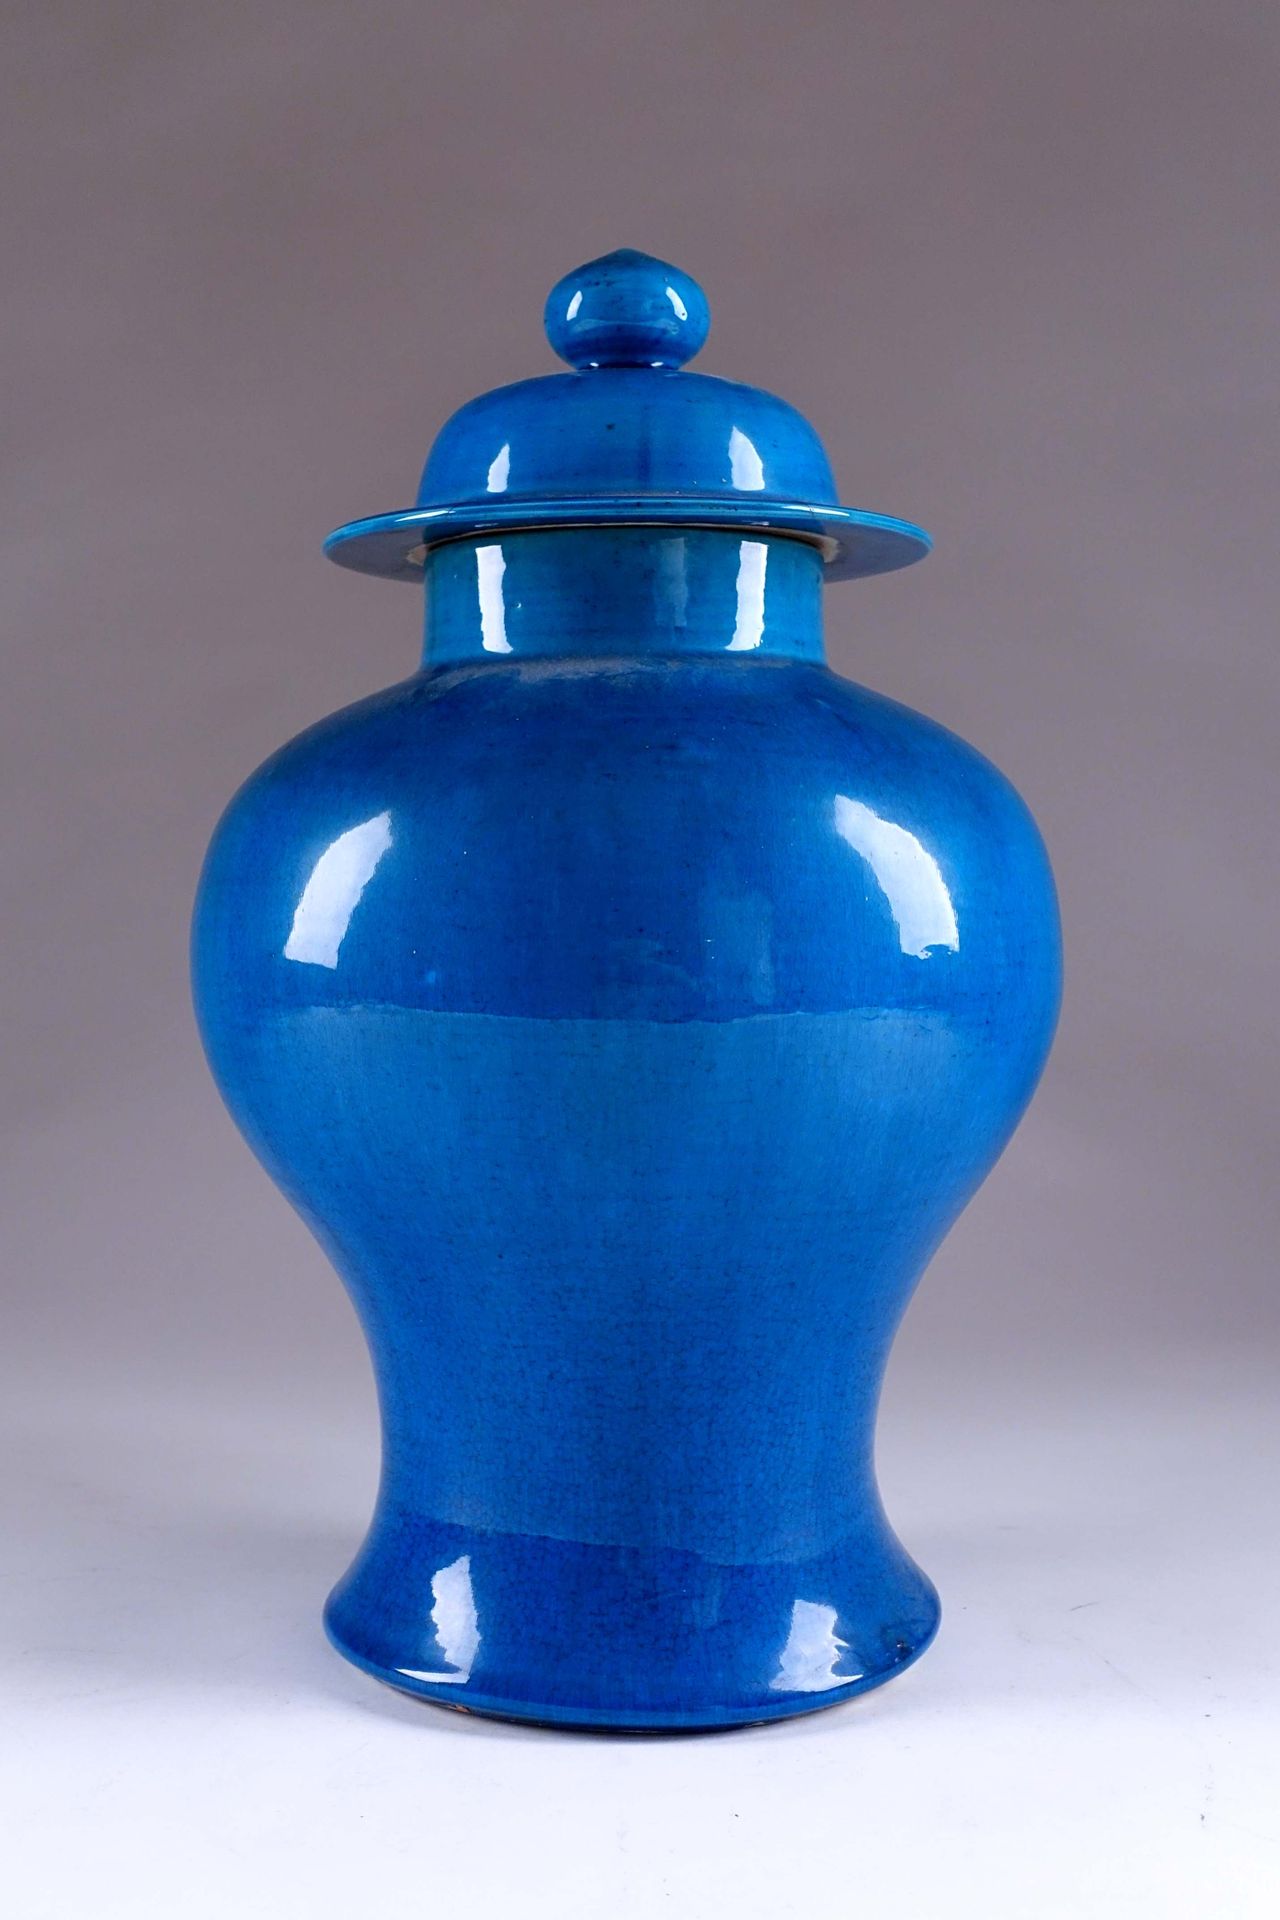 Chine de la Fin du XIXe siècle. 大柱形花瓶。瓷器上的绿松石蓝单色釉。高度：44厘米。恢复了盖子。